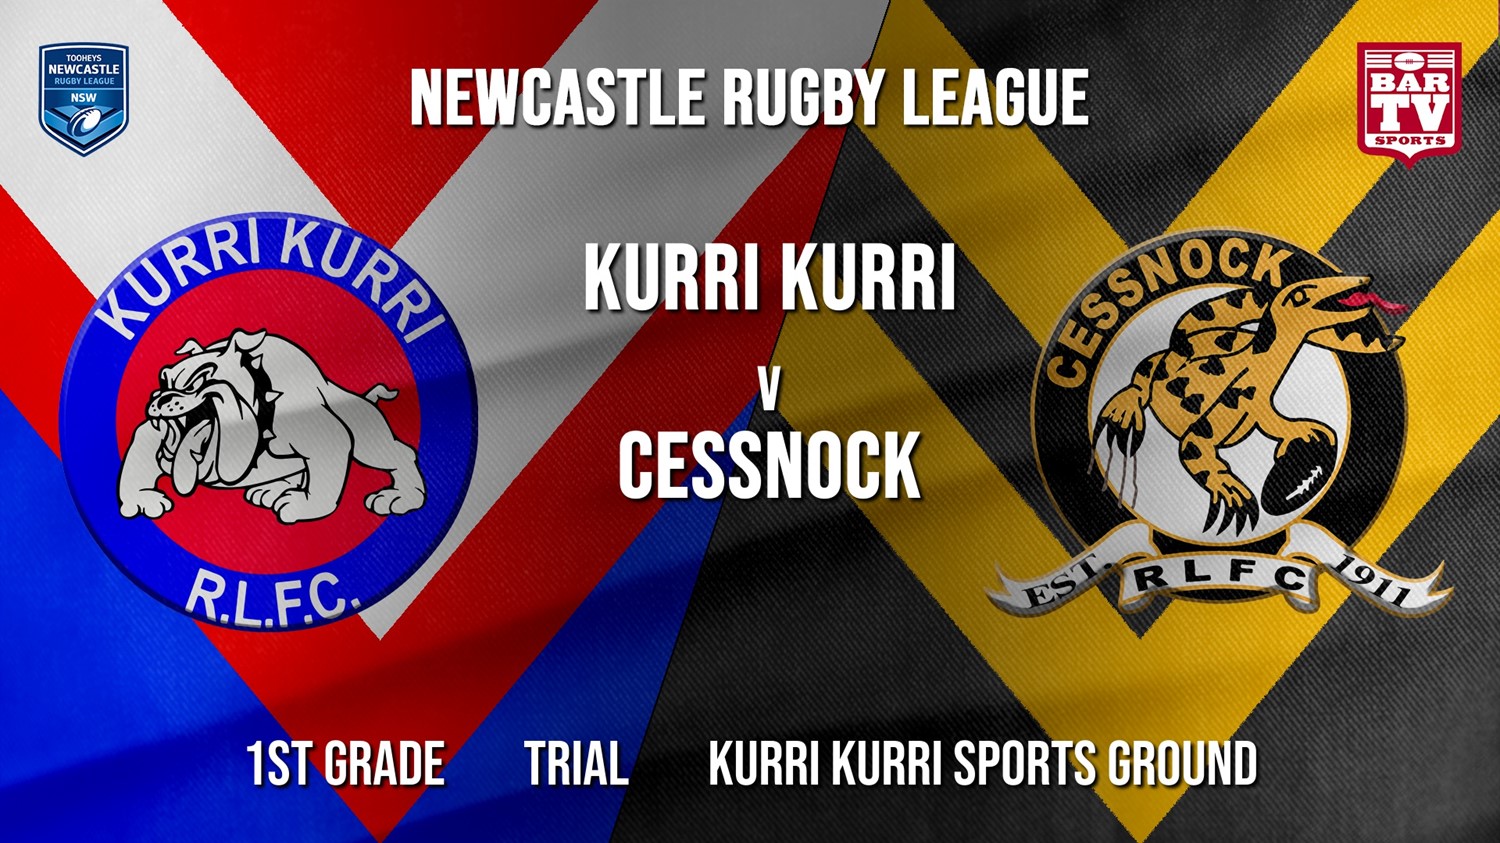 Newcastle Rugby League Trial - 1st Grade - Kurri Kurri Bulldogs v Cessnock Goannas Minigame Slate Image